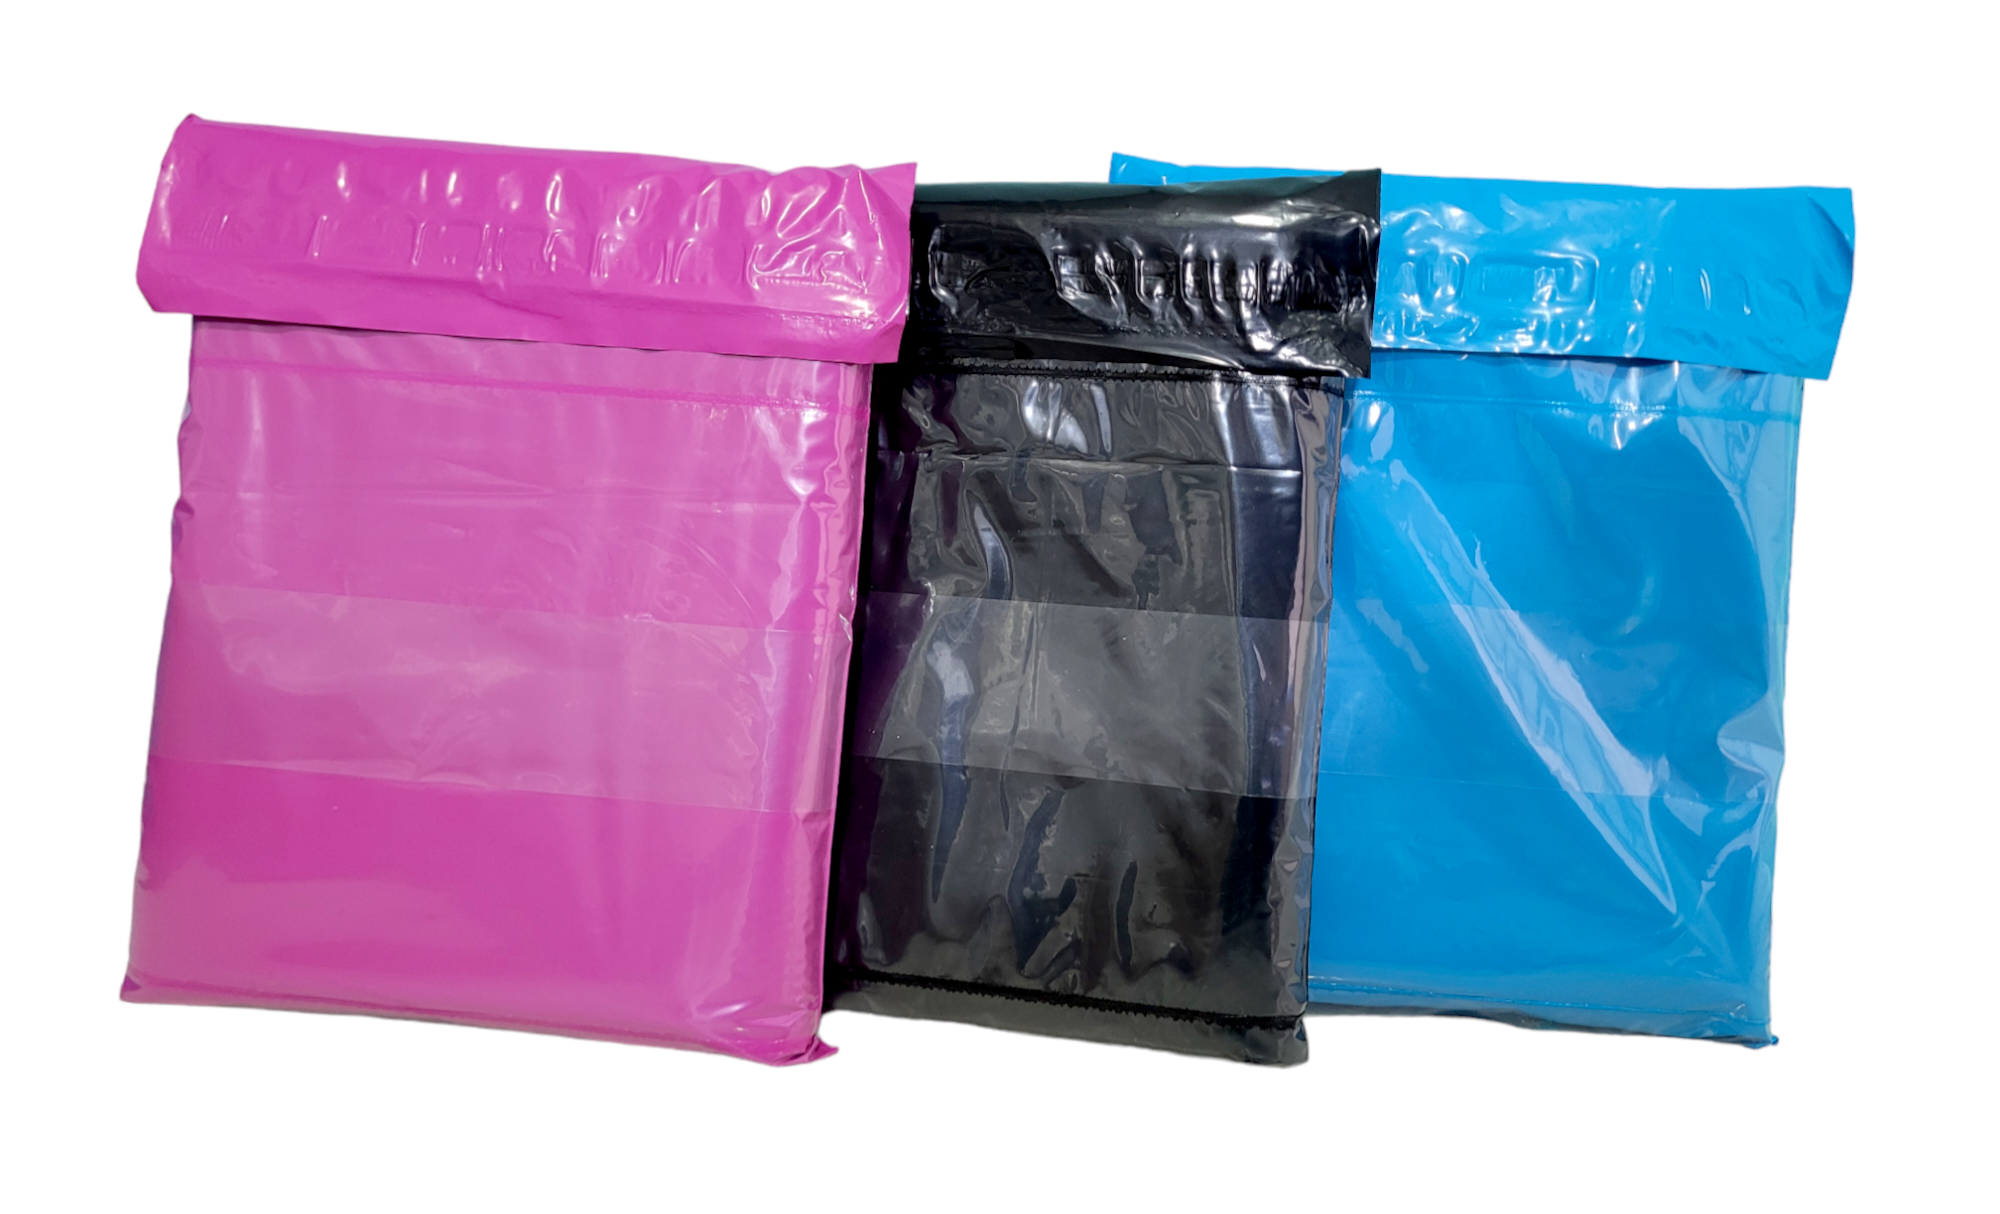 Bolsa De Seguridad Biodegradable Portaguia 19x25cm x 100 Unds Diferentes Colores